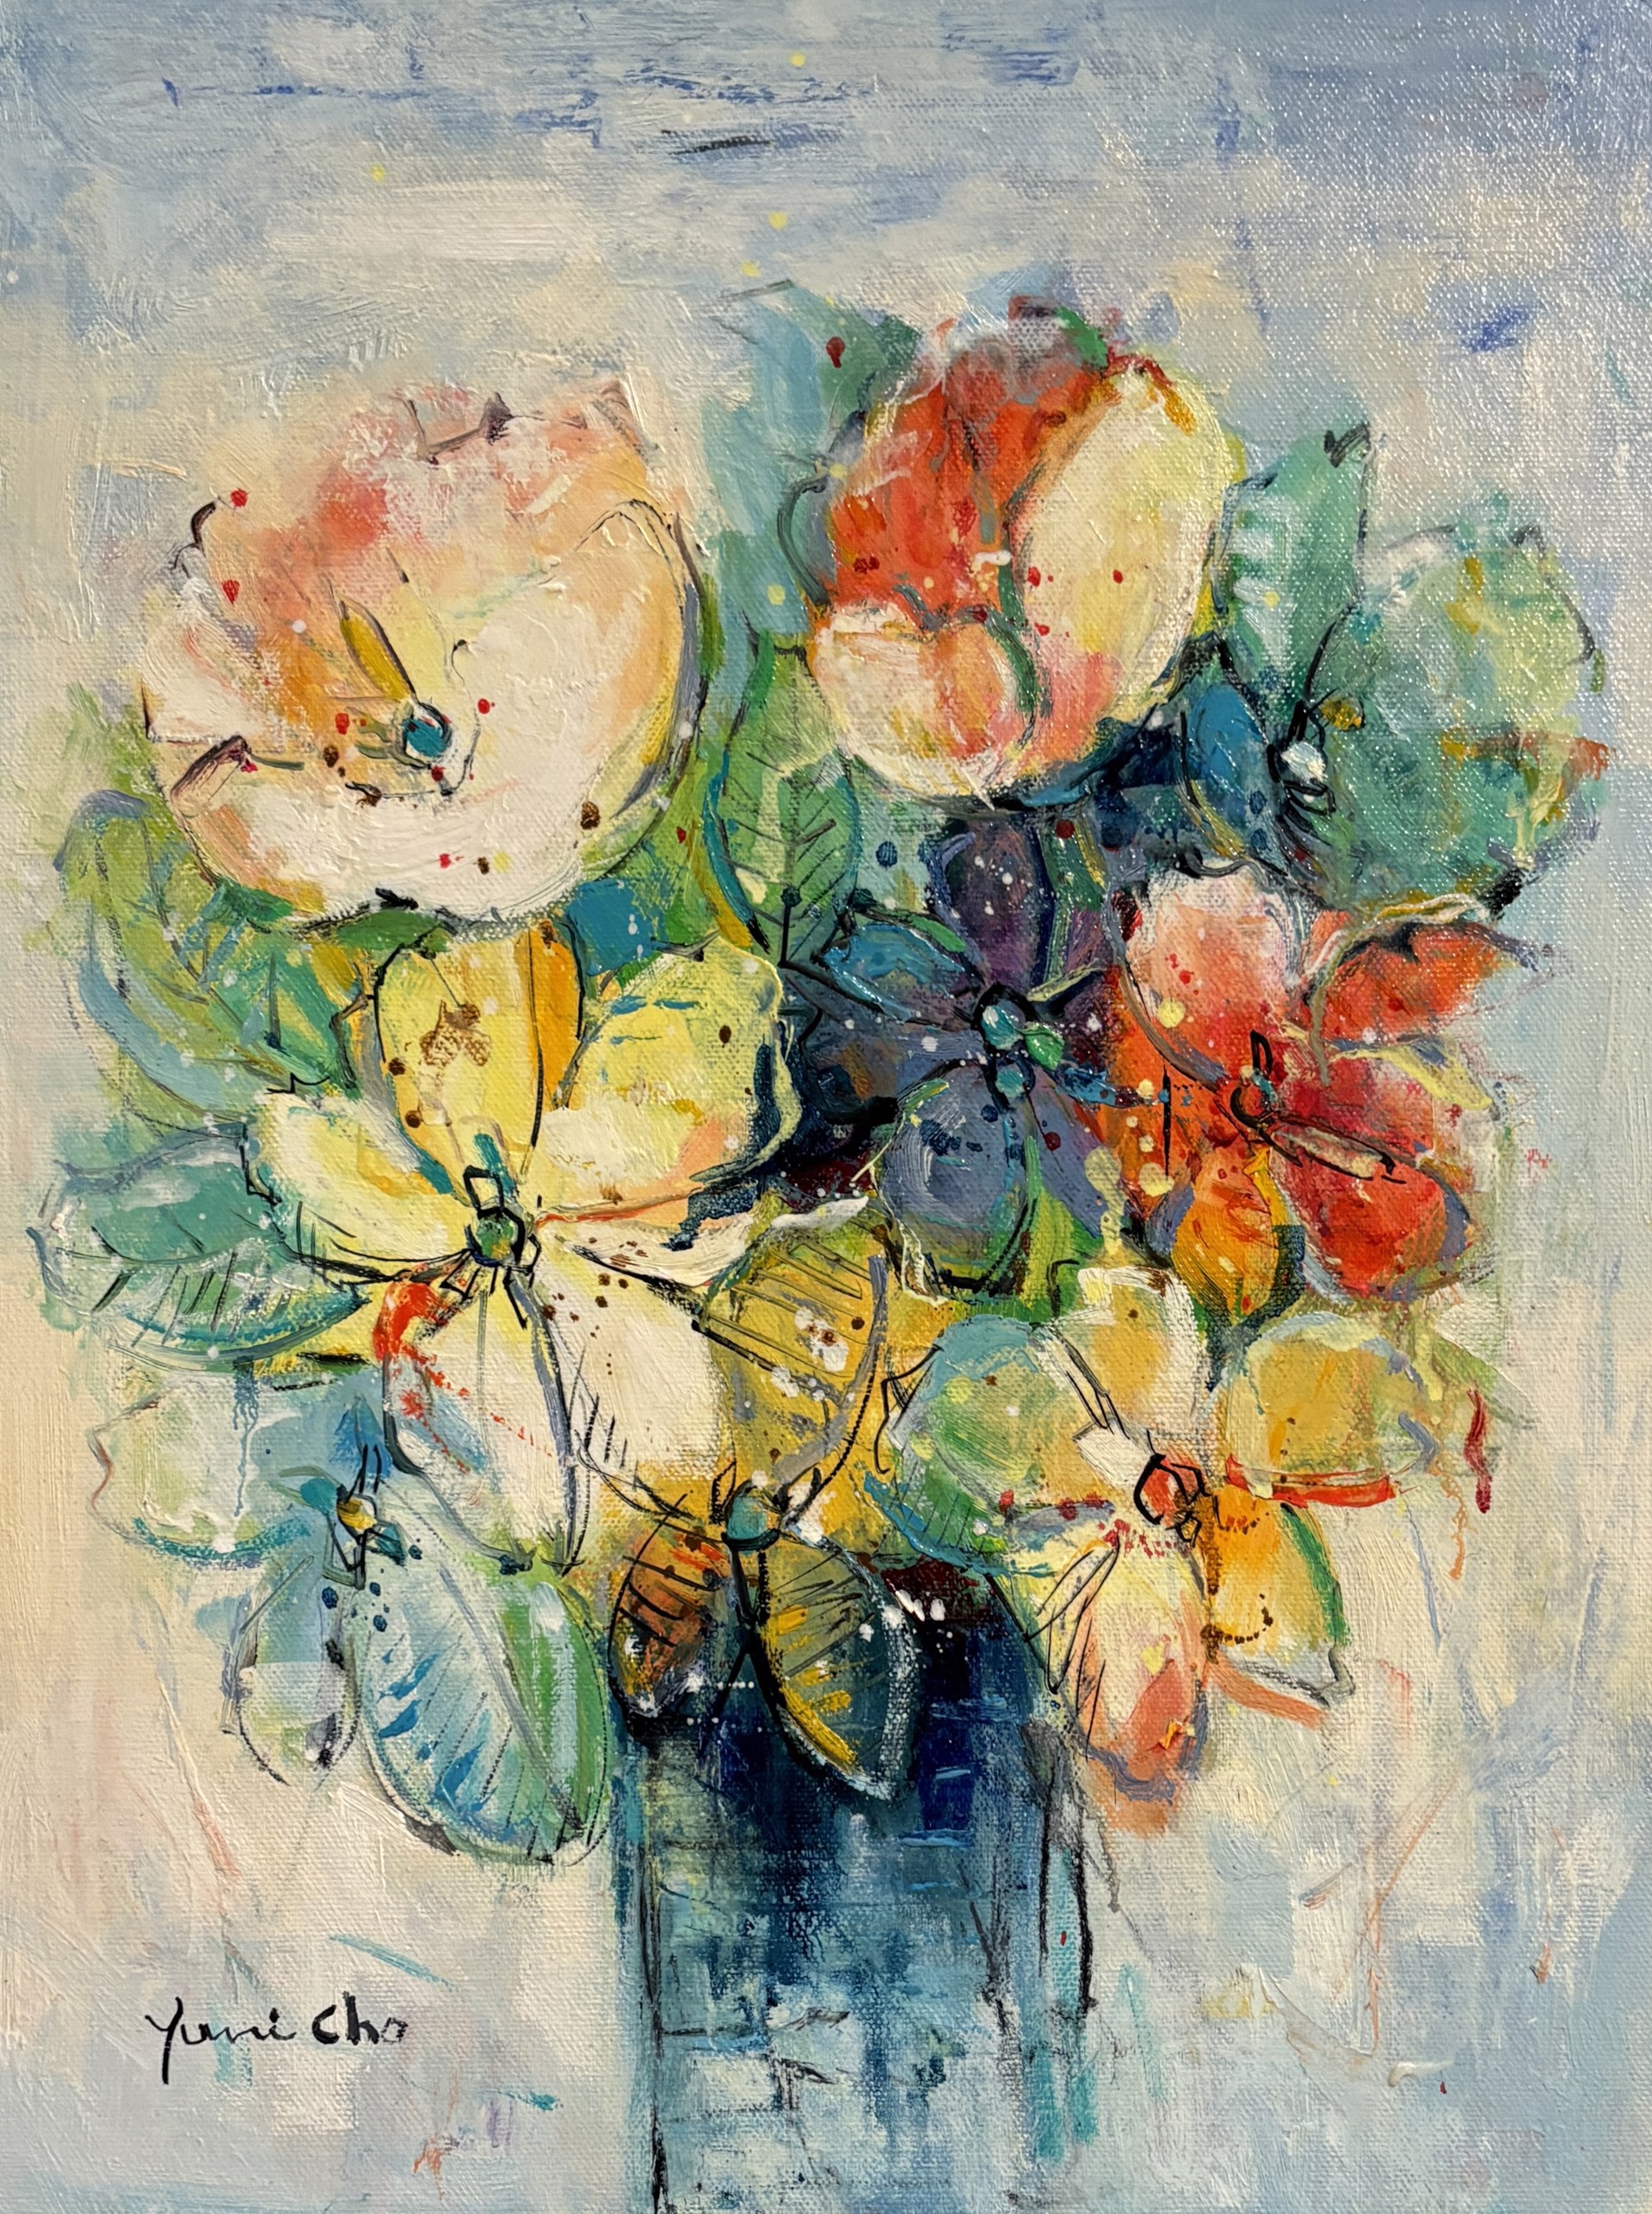 FLOWERS IN A VASE III by YUNI CHO